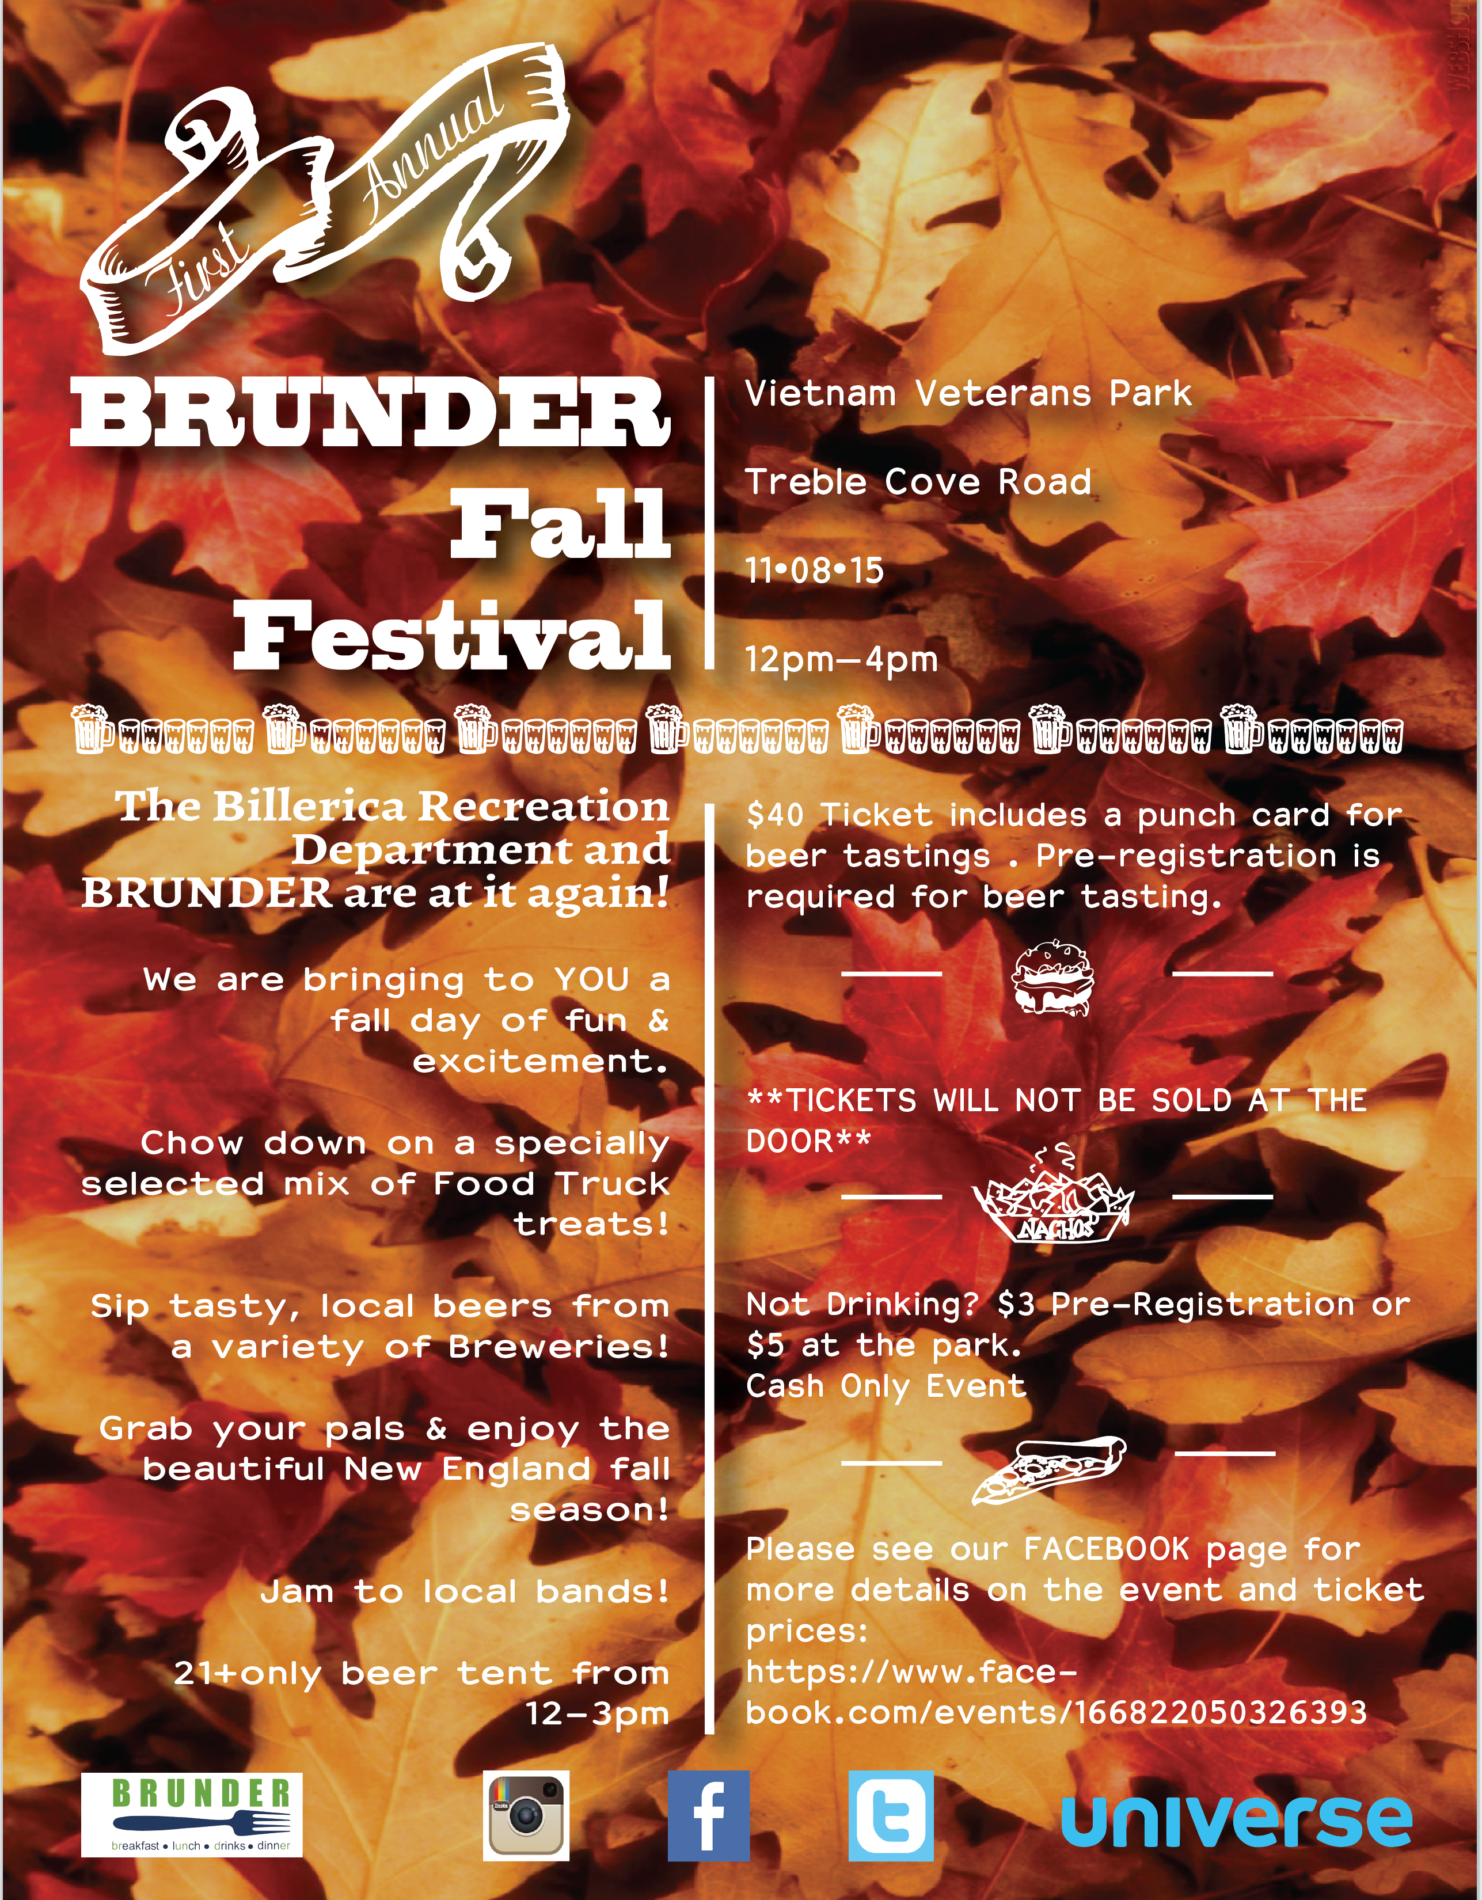 Fall Festival Flyer 10.15.15 (2)